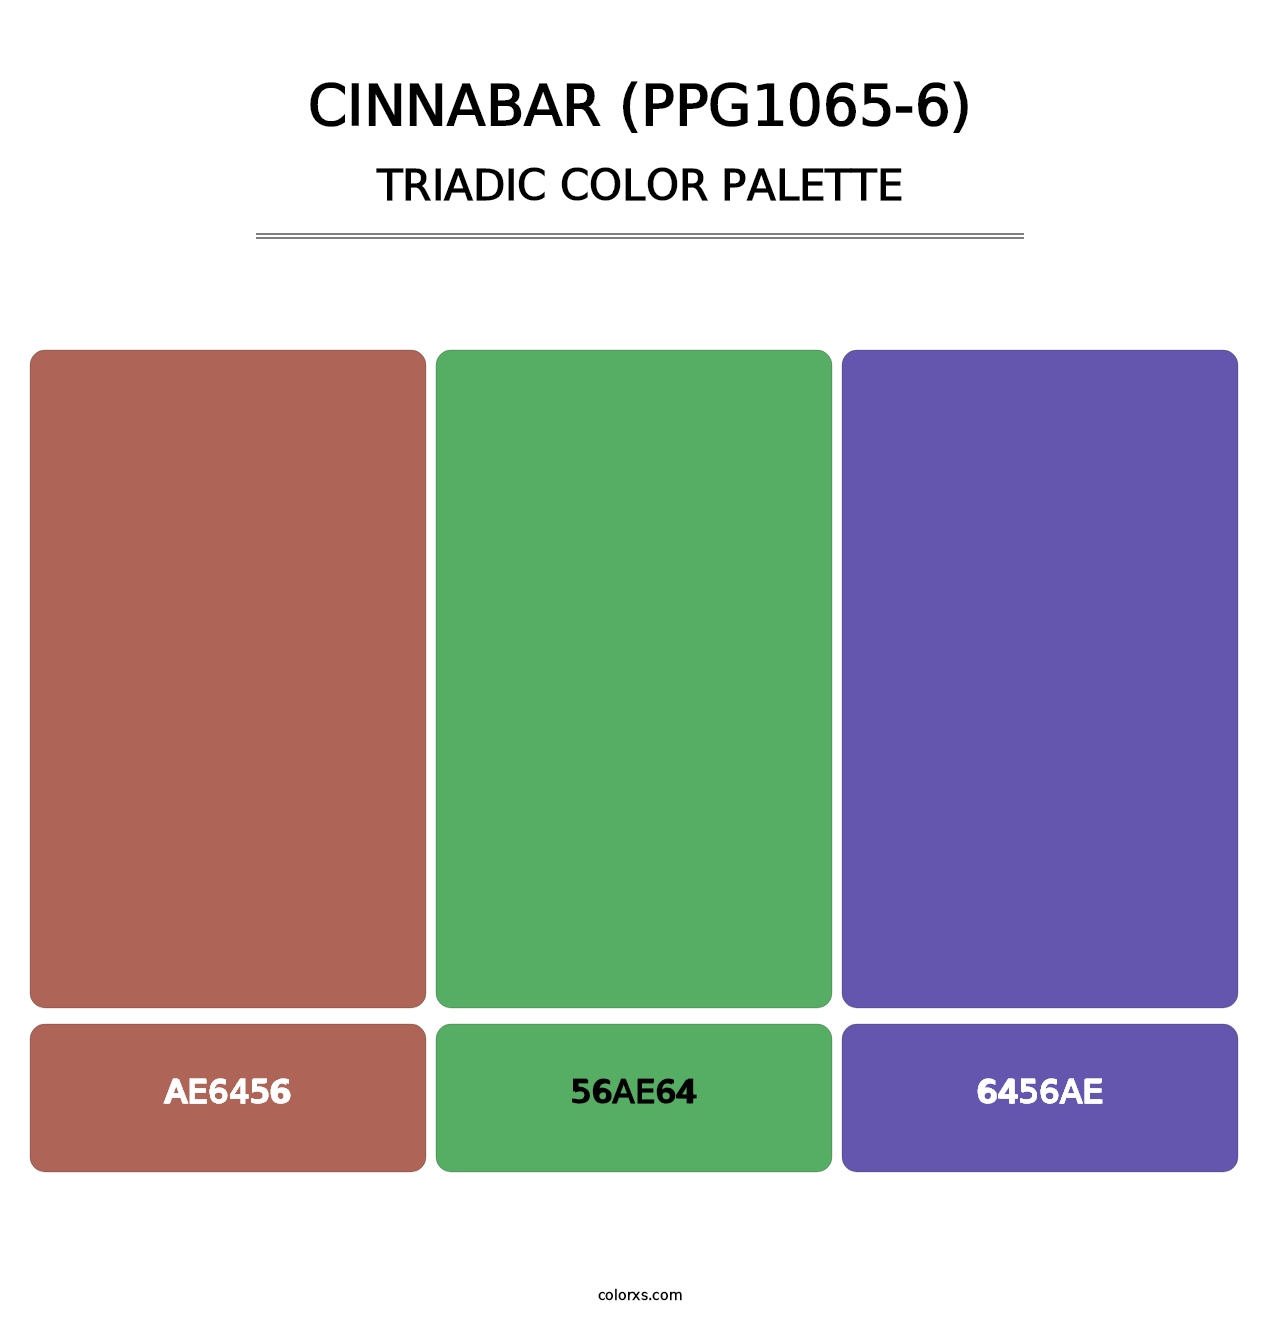 Cinnabar (PPG1065-6) - Triadic Color Palette